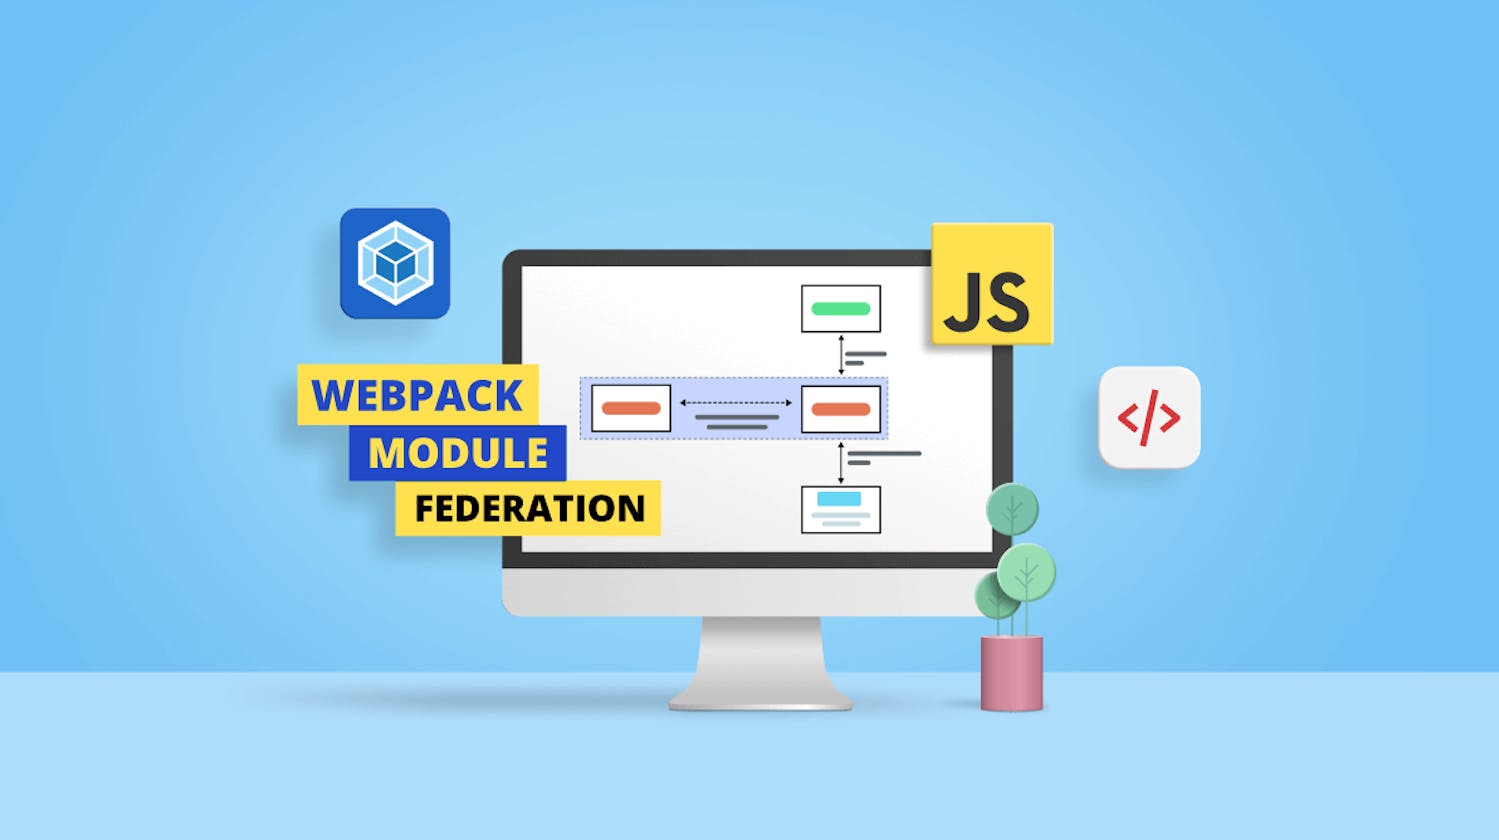 What is Webpack Module Federation?